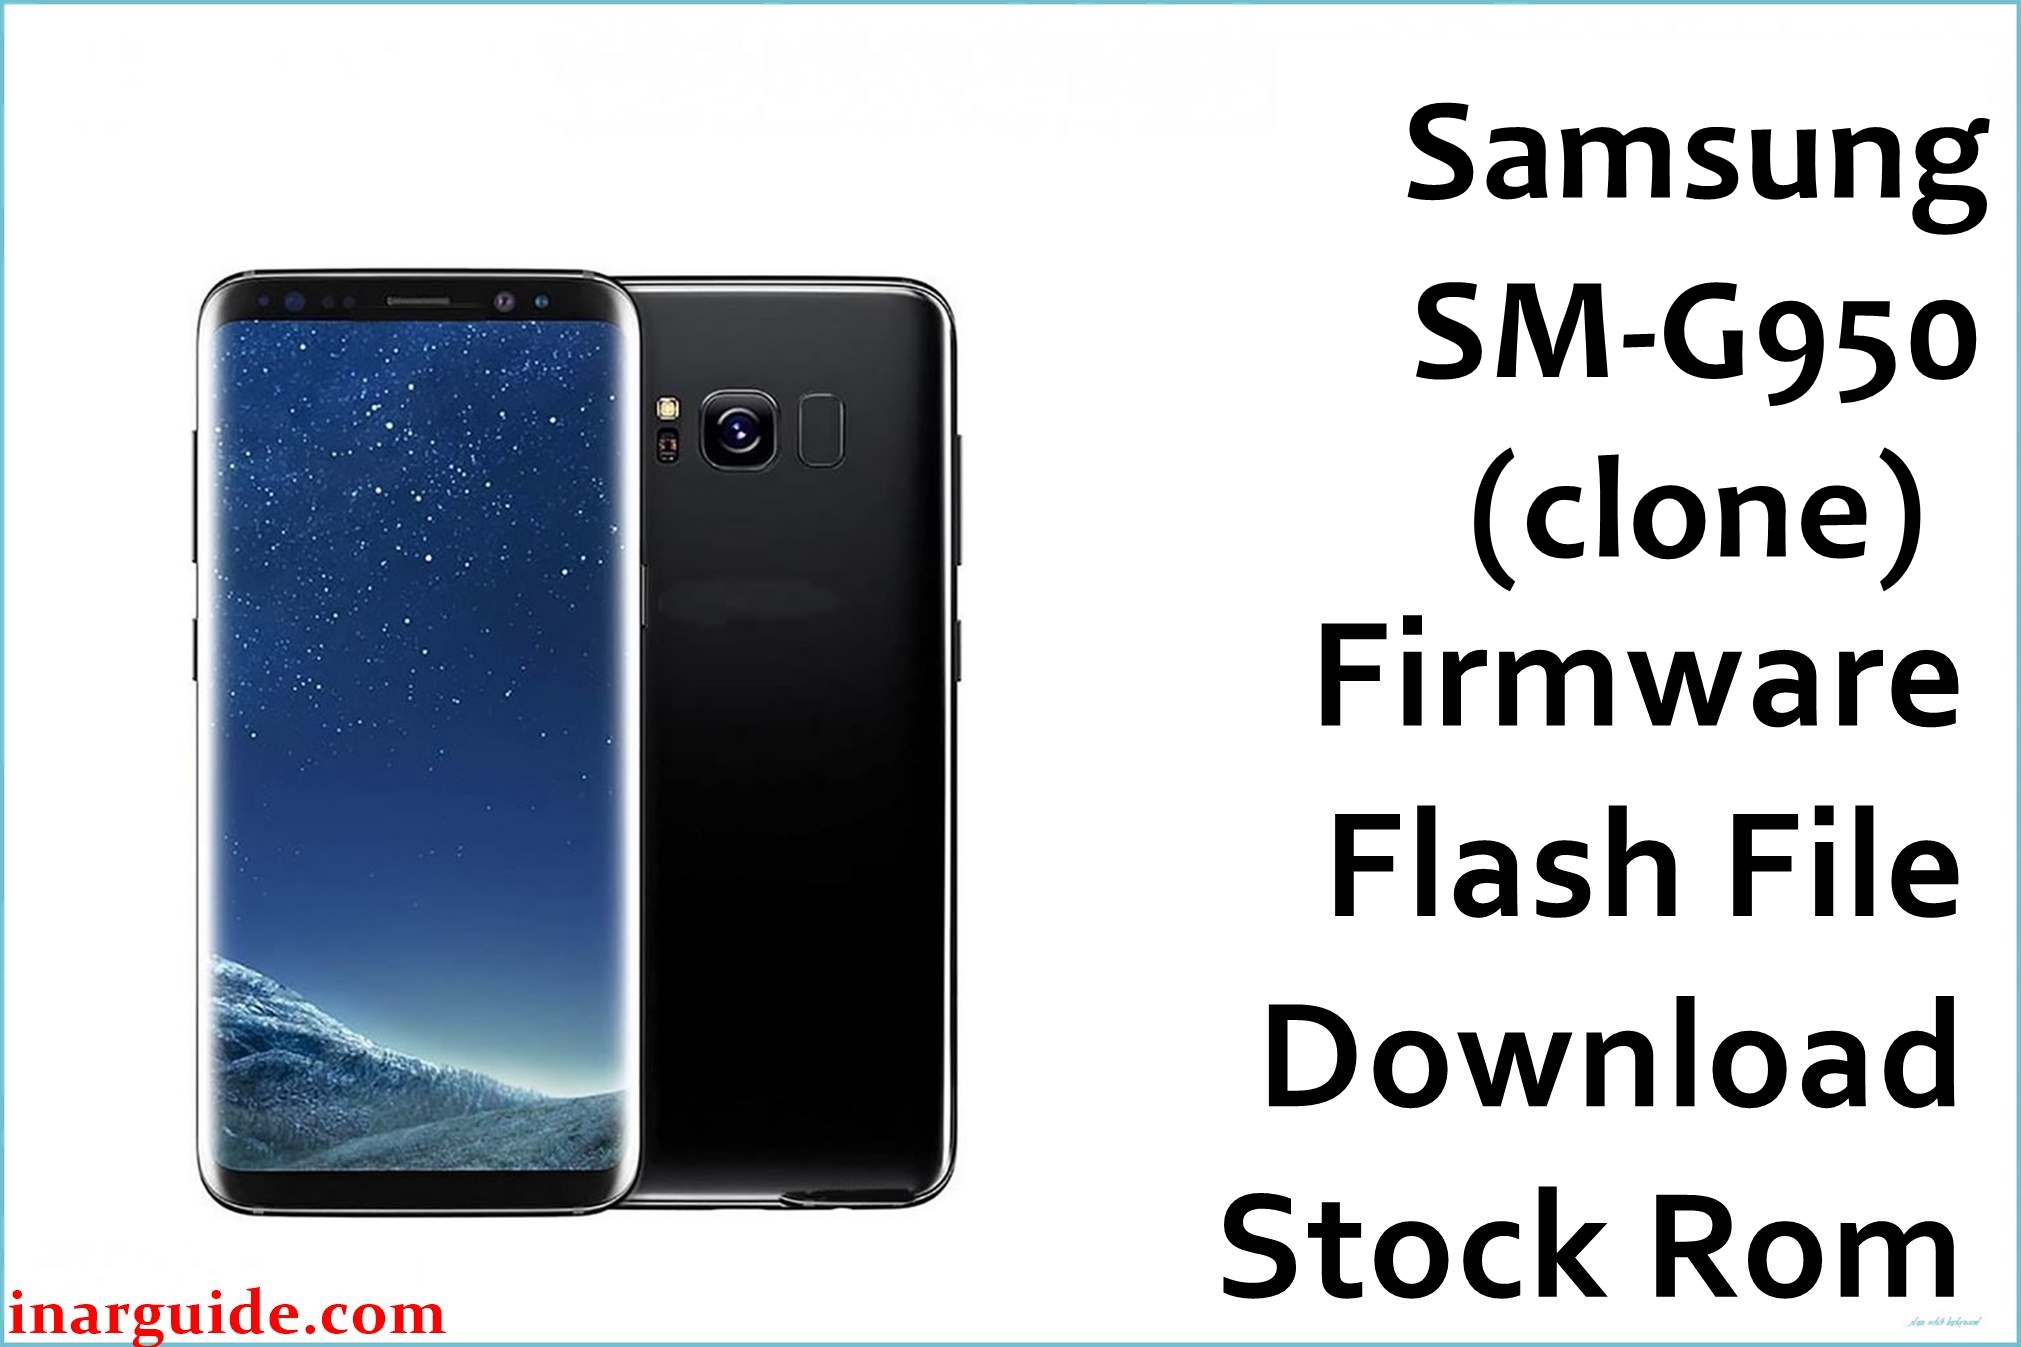 Samsung SM G950 clone